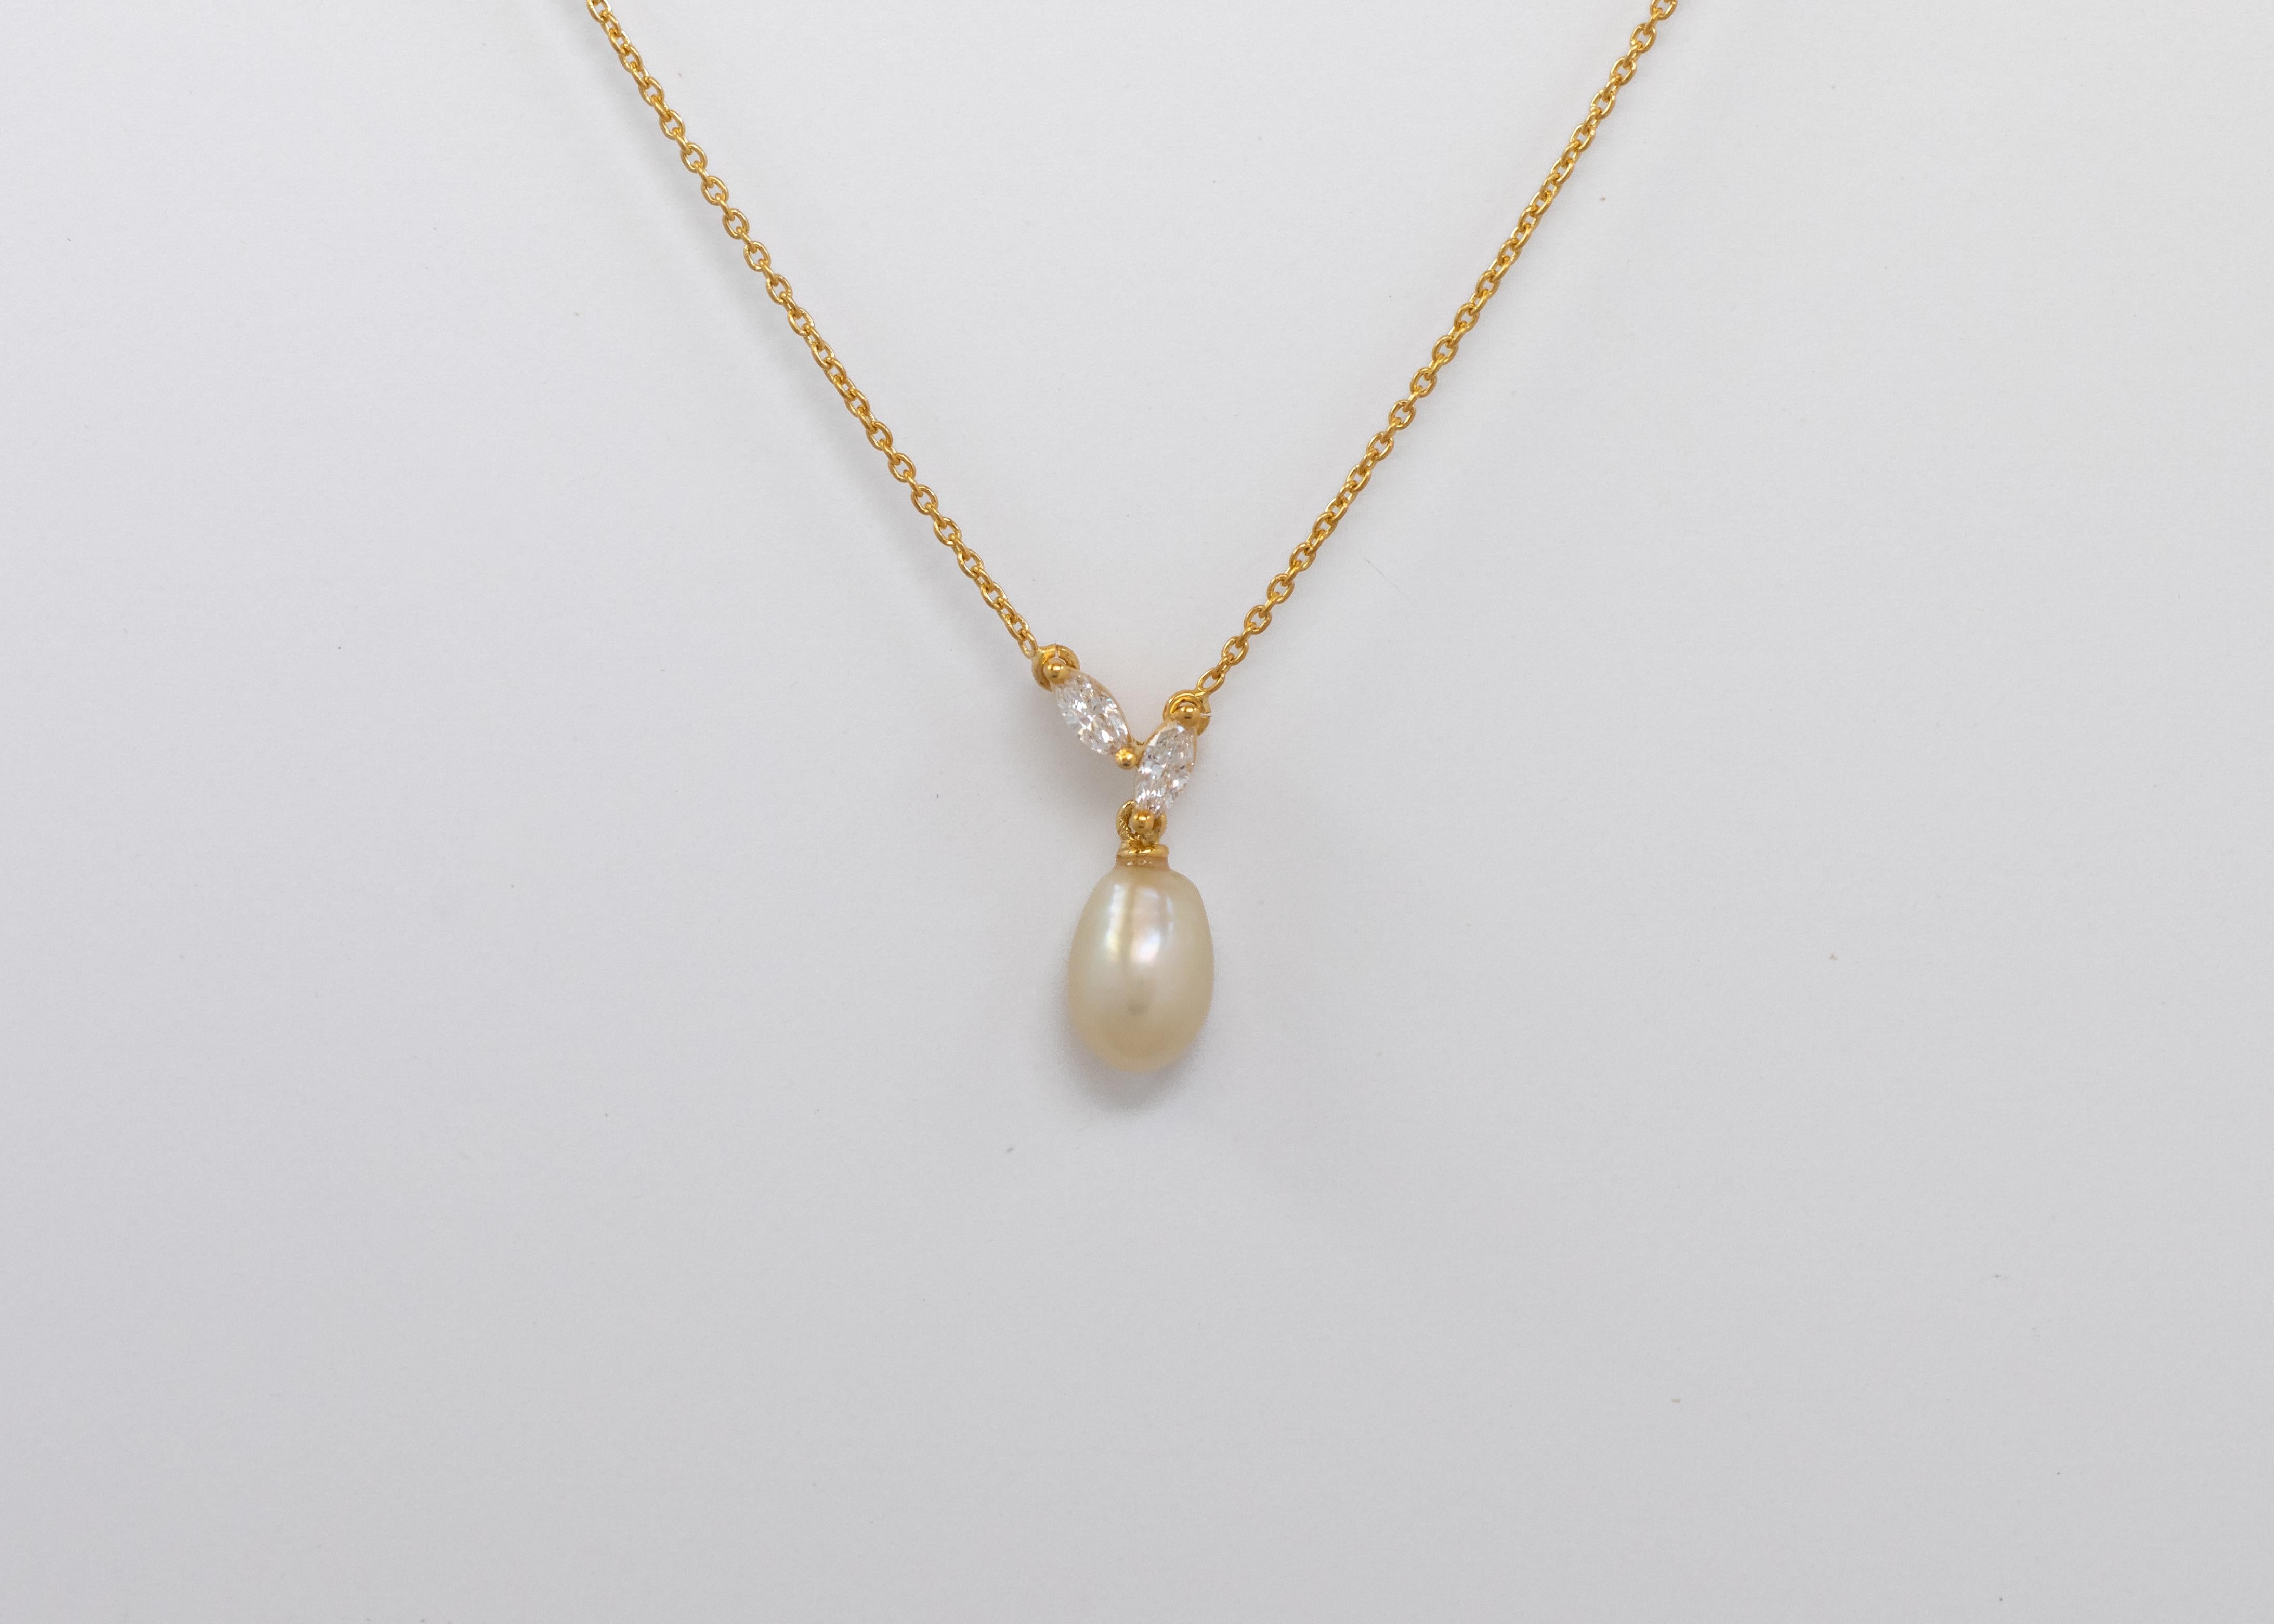 bahraini pearl necklace